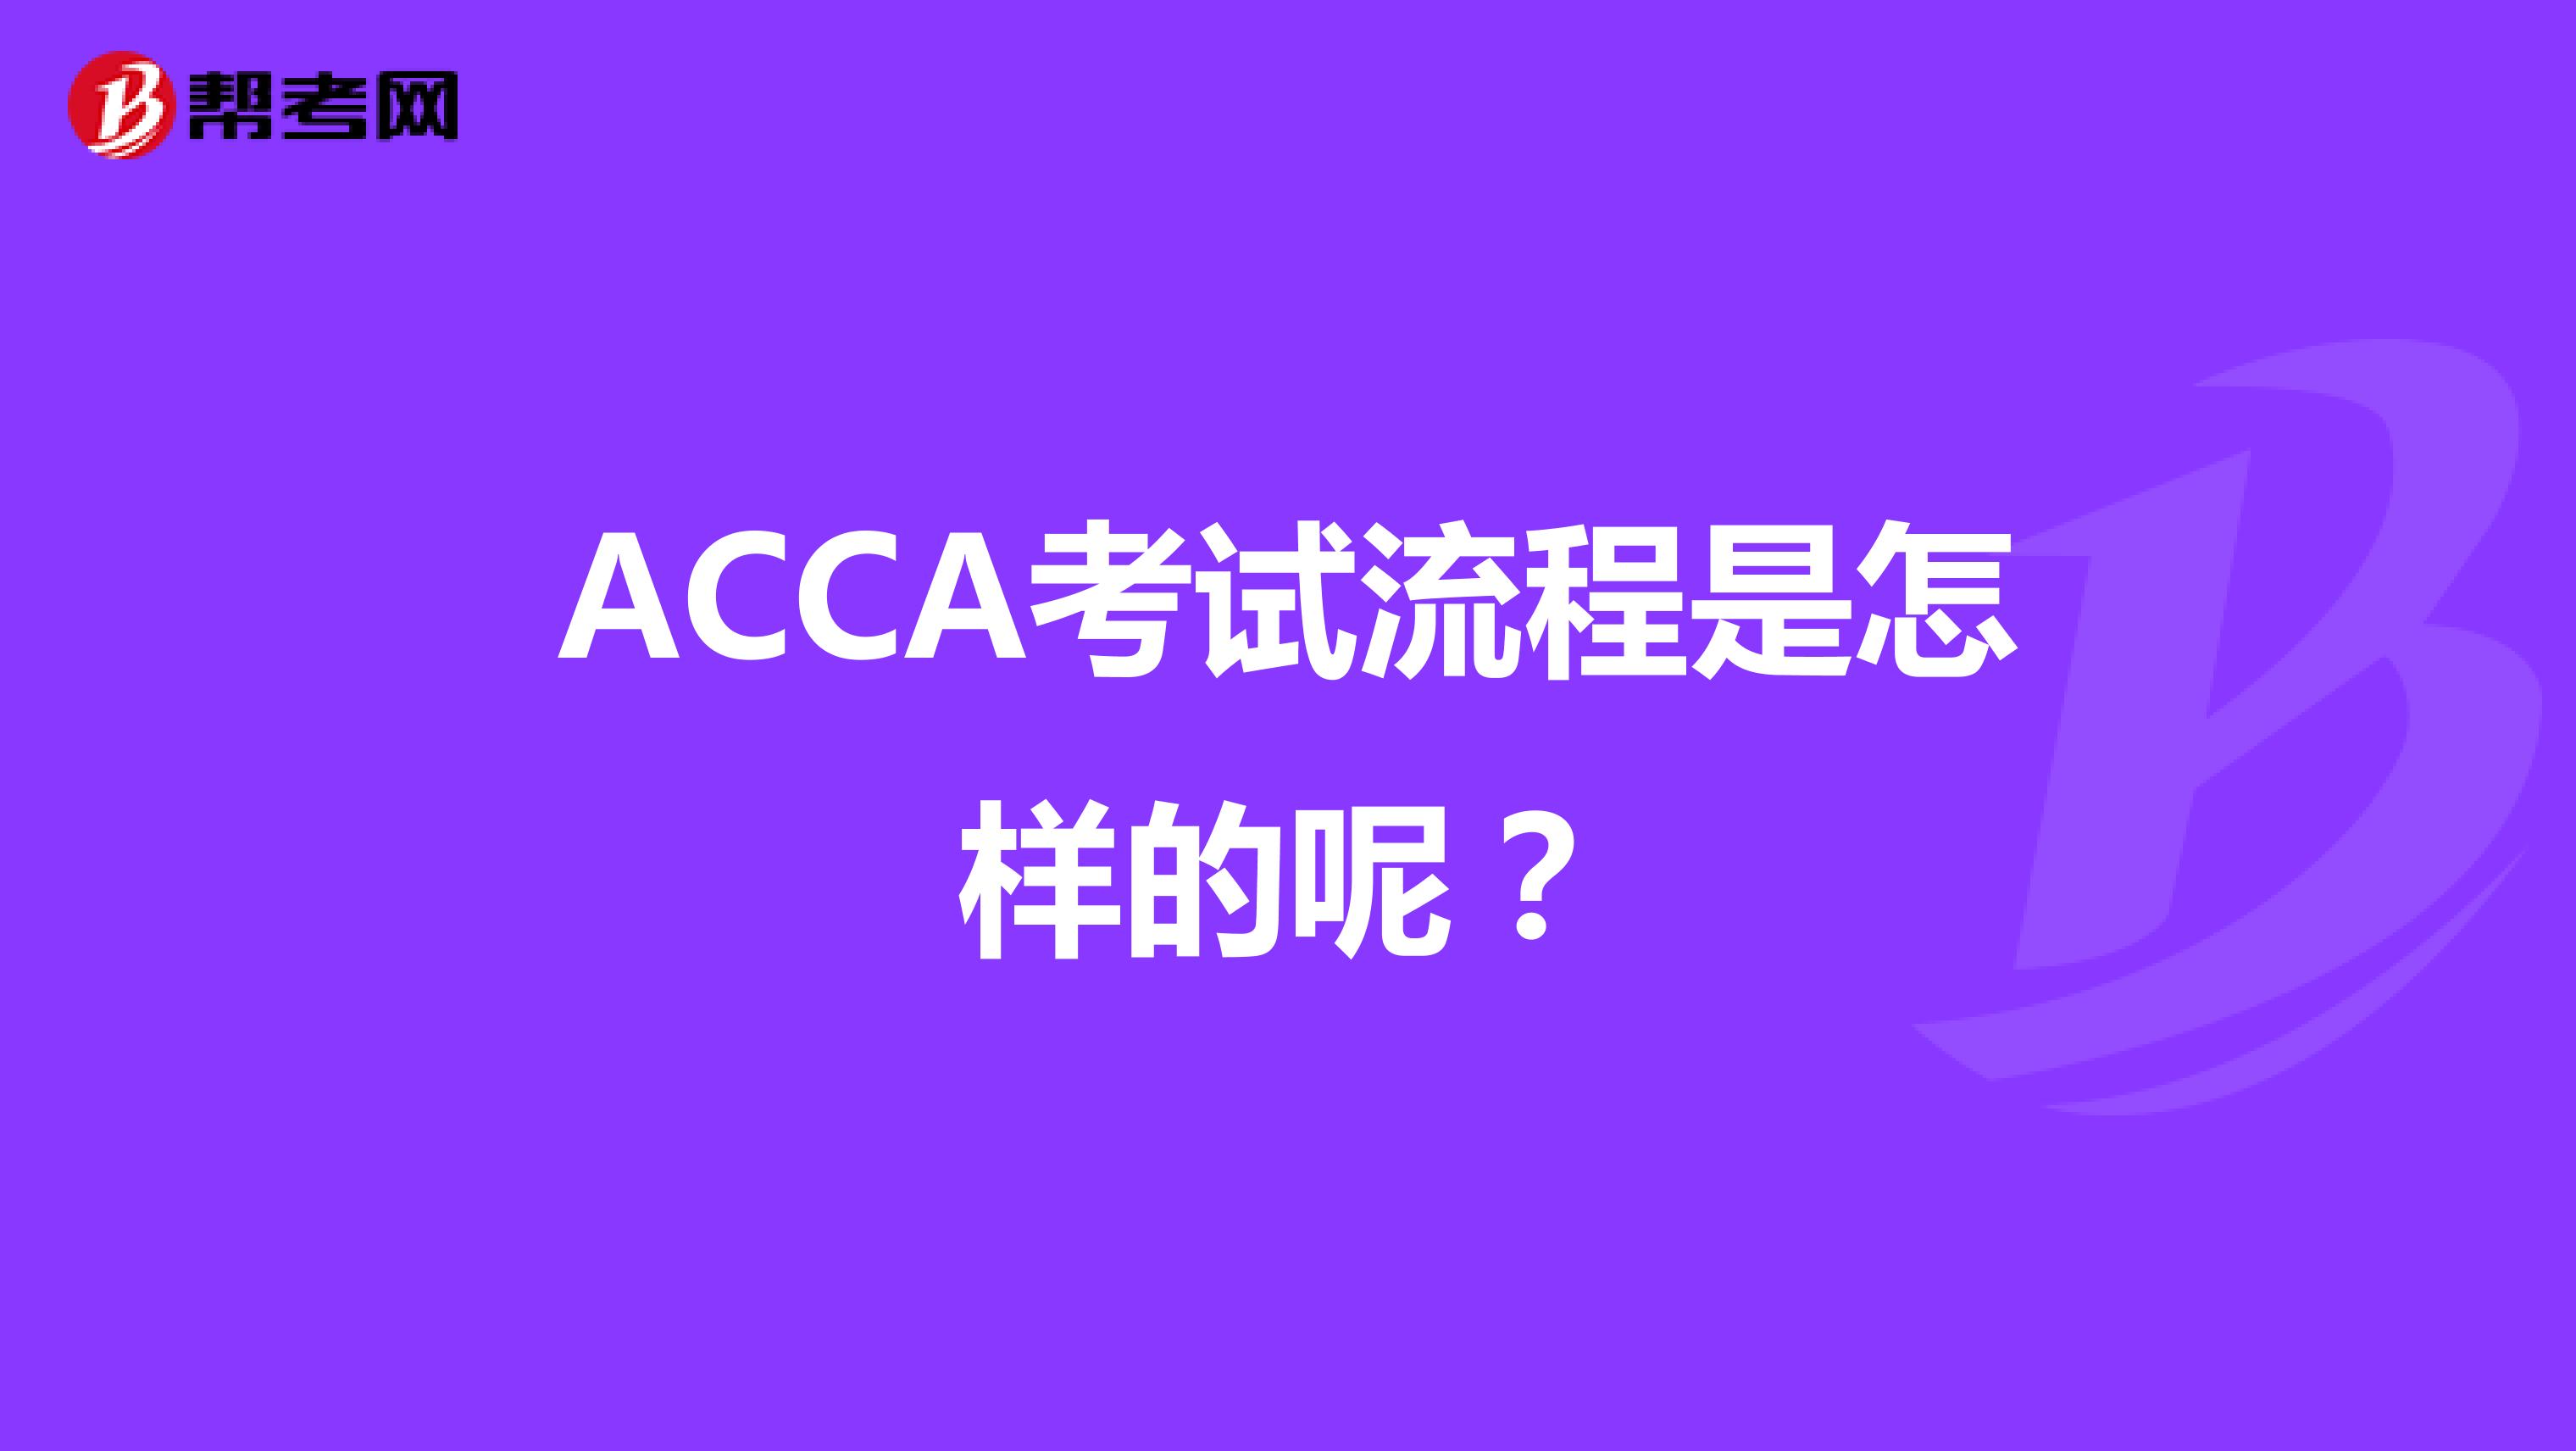 ACCA考试流程是怎样的呢？